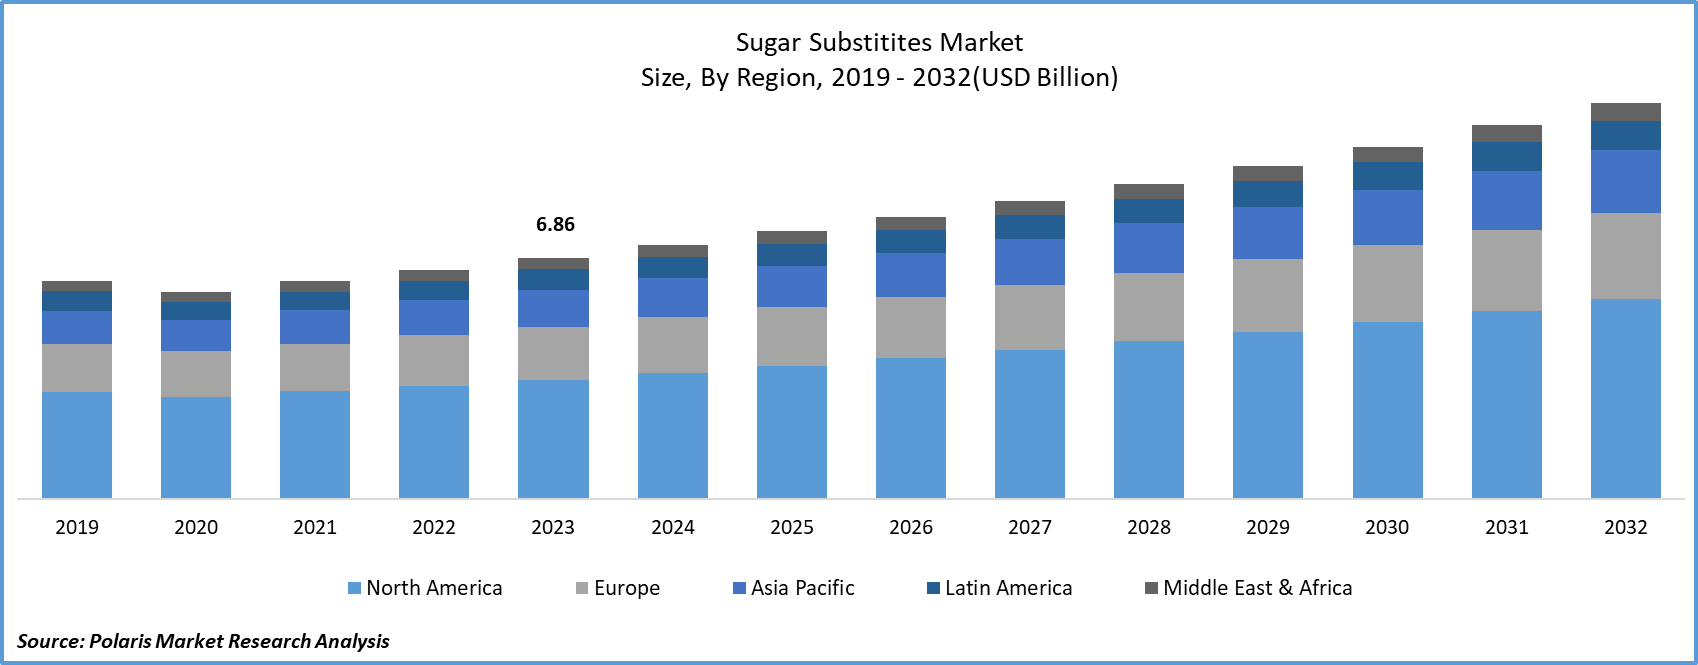 Sugar Substitutes Market Size